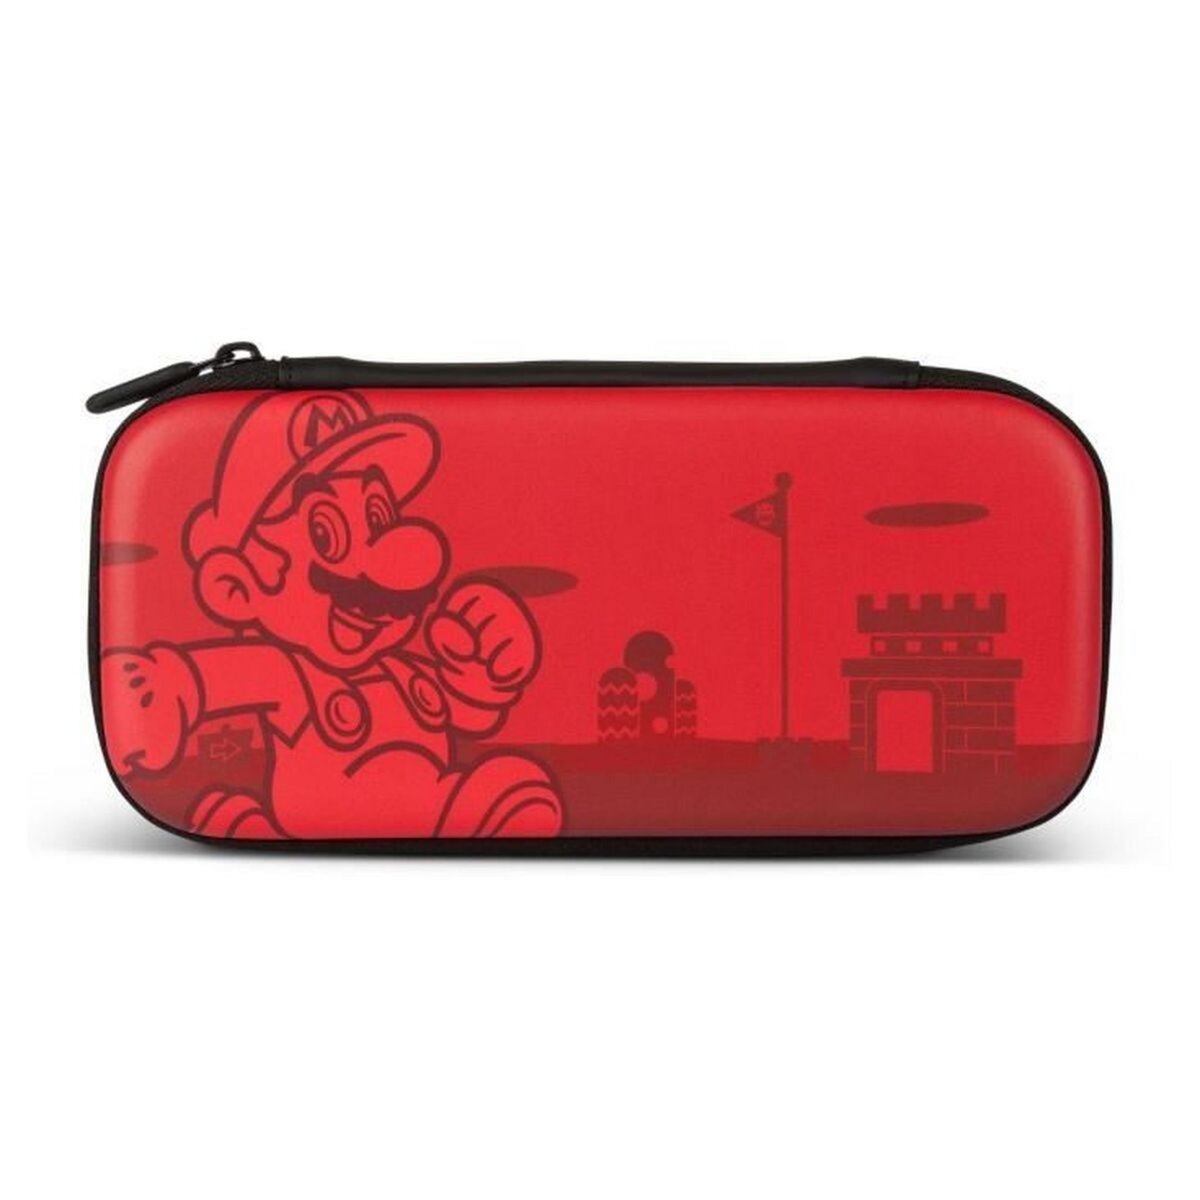 Etui de protection Super Mario Nintendo Switch Lite pas cher 